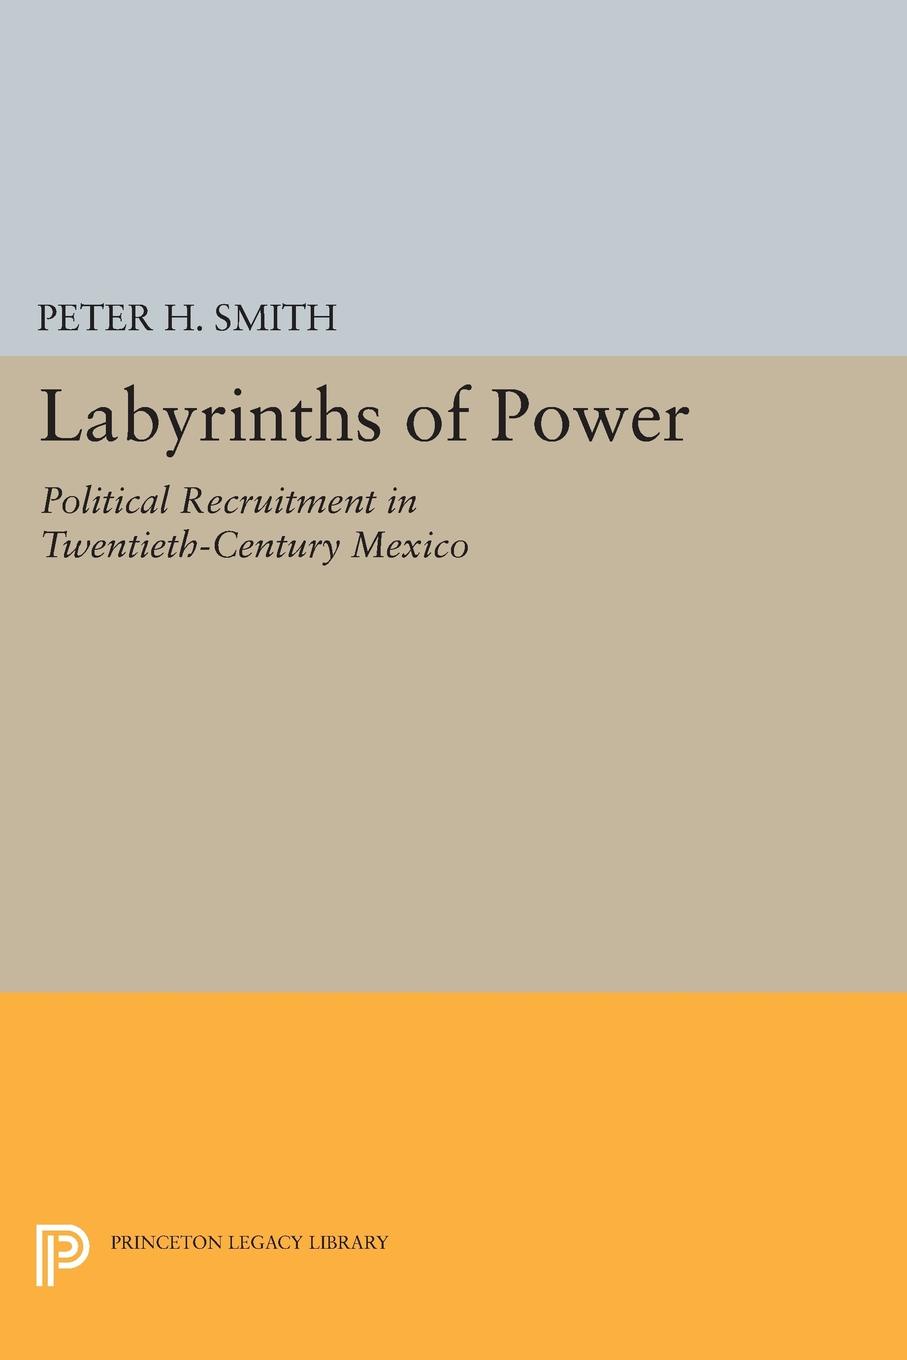 Labyrinths of Power. Political Recruitment in Twentieth-Century Mexico